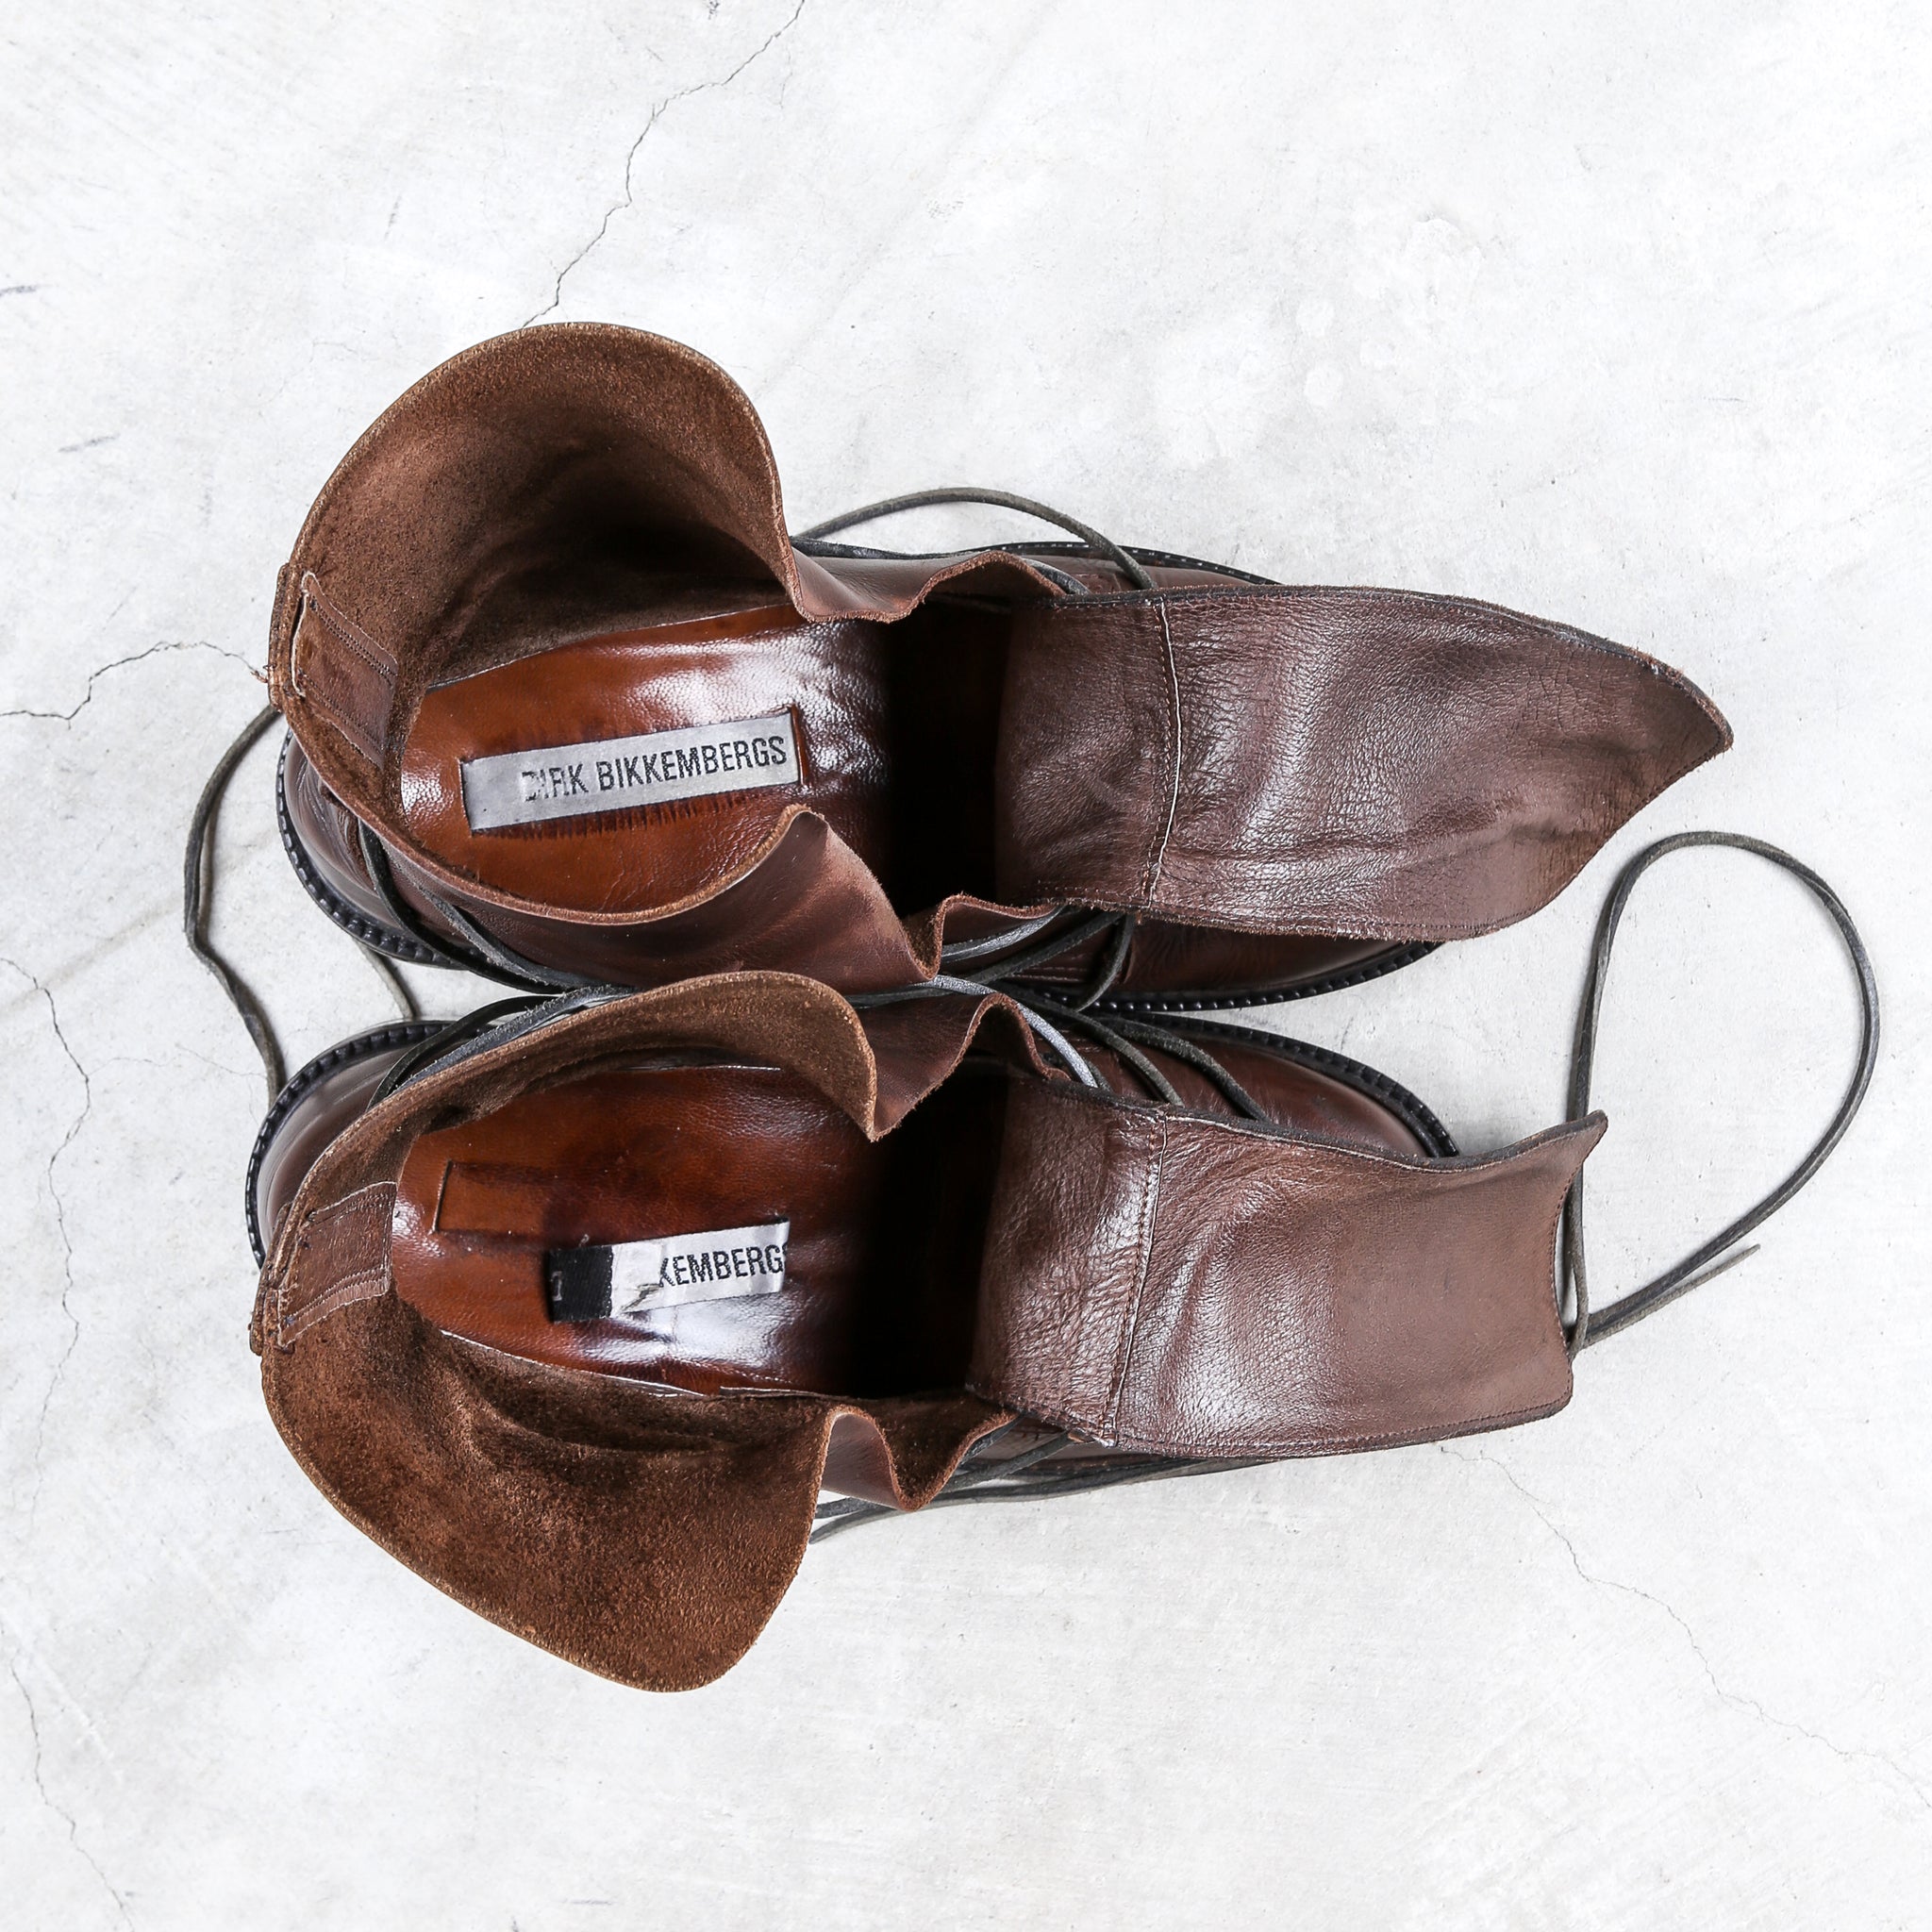 Dirk Bikkembergs Brown Metal Lace Through Heel Boots Size 41